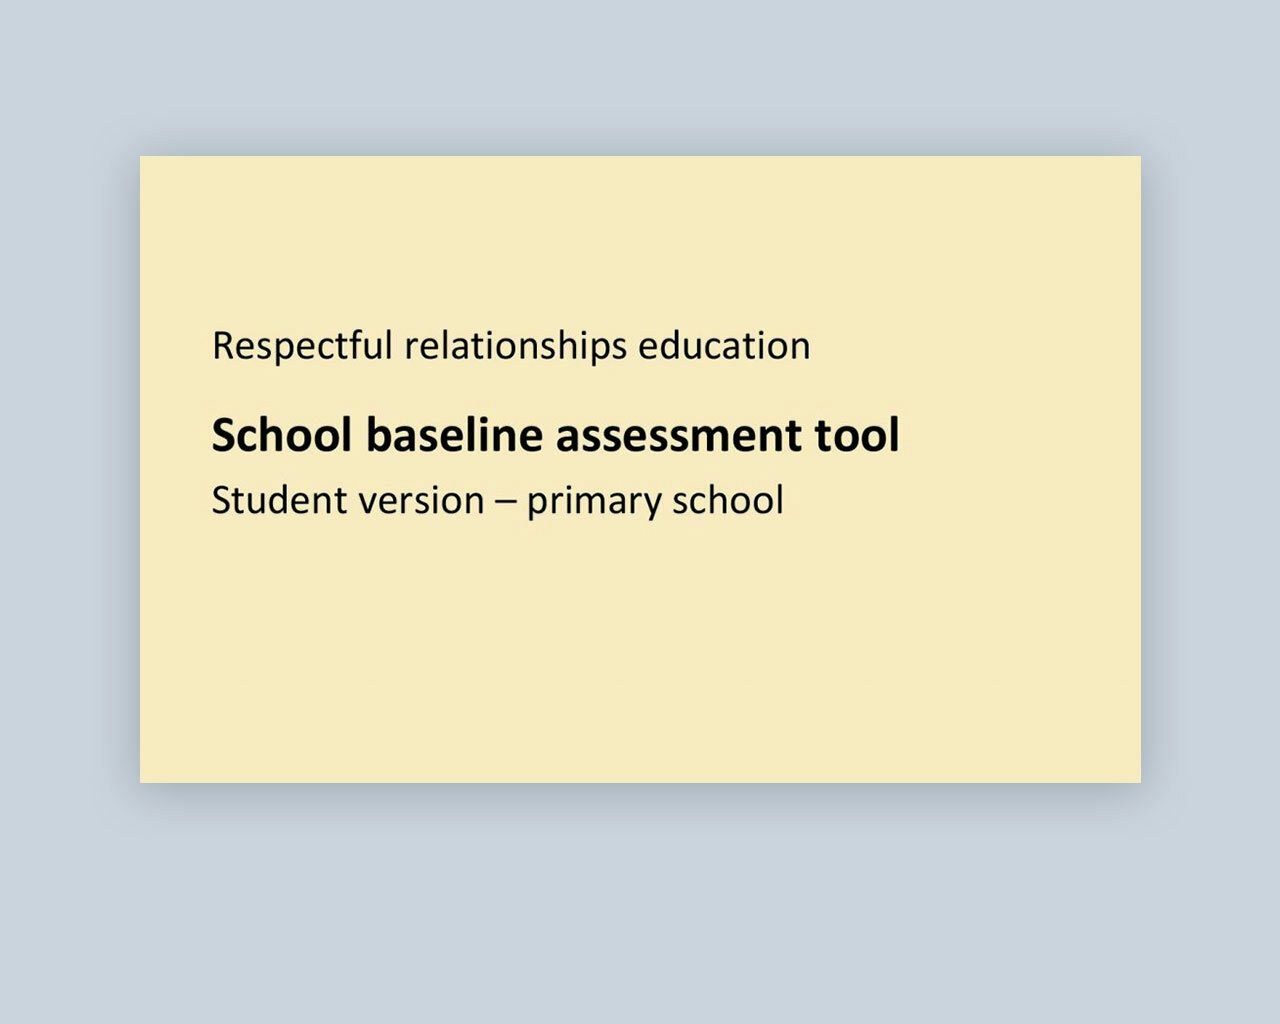 School baseline self-assessment tool student version – primary